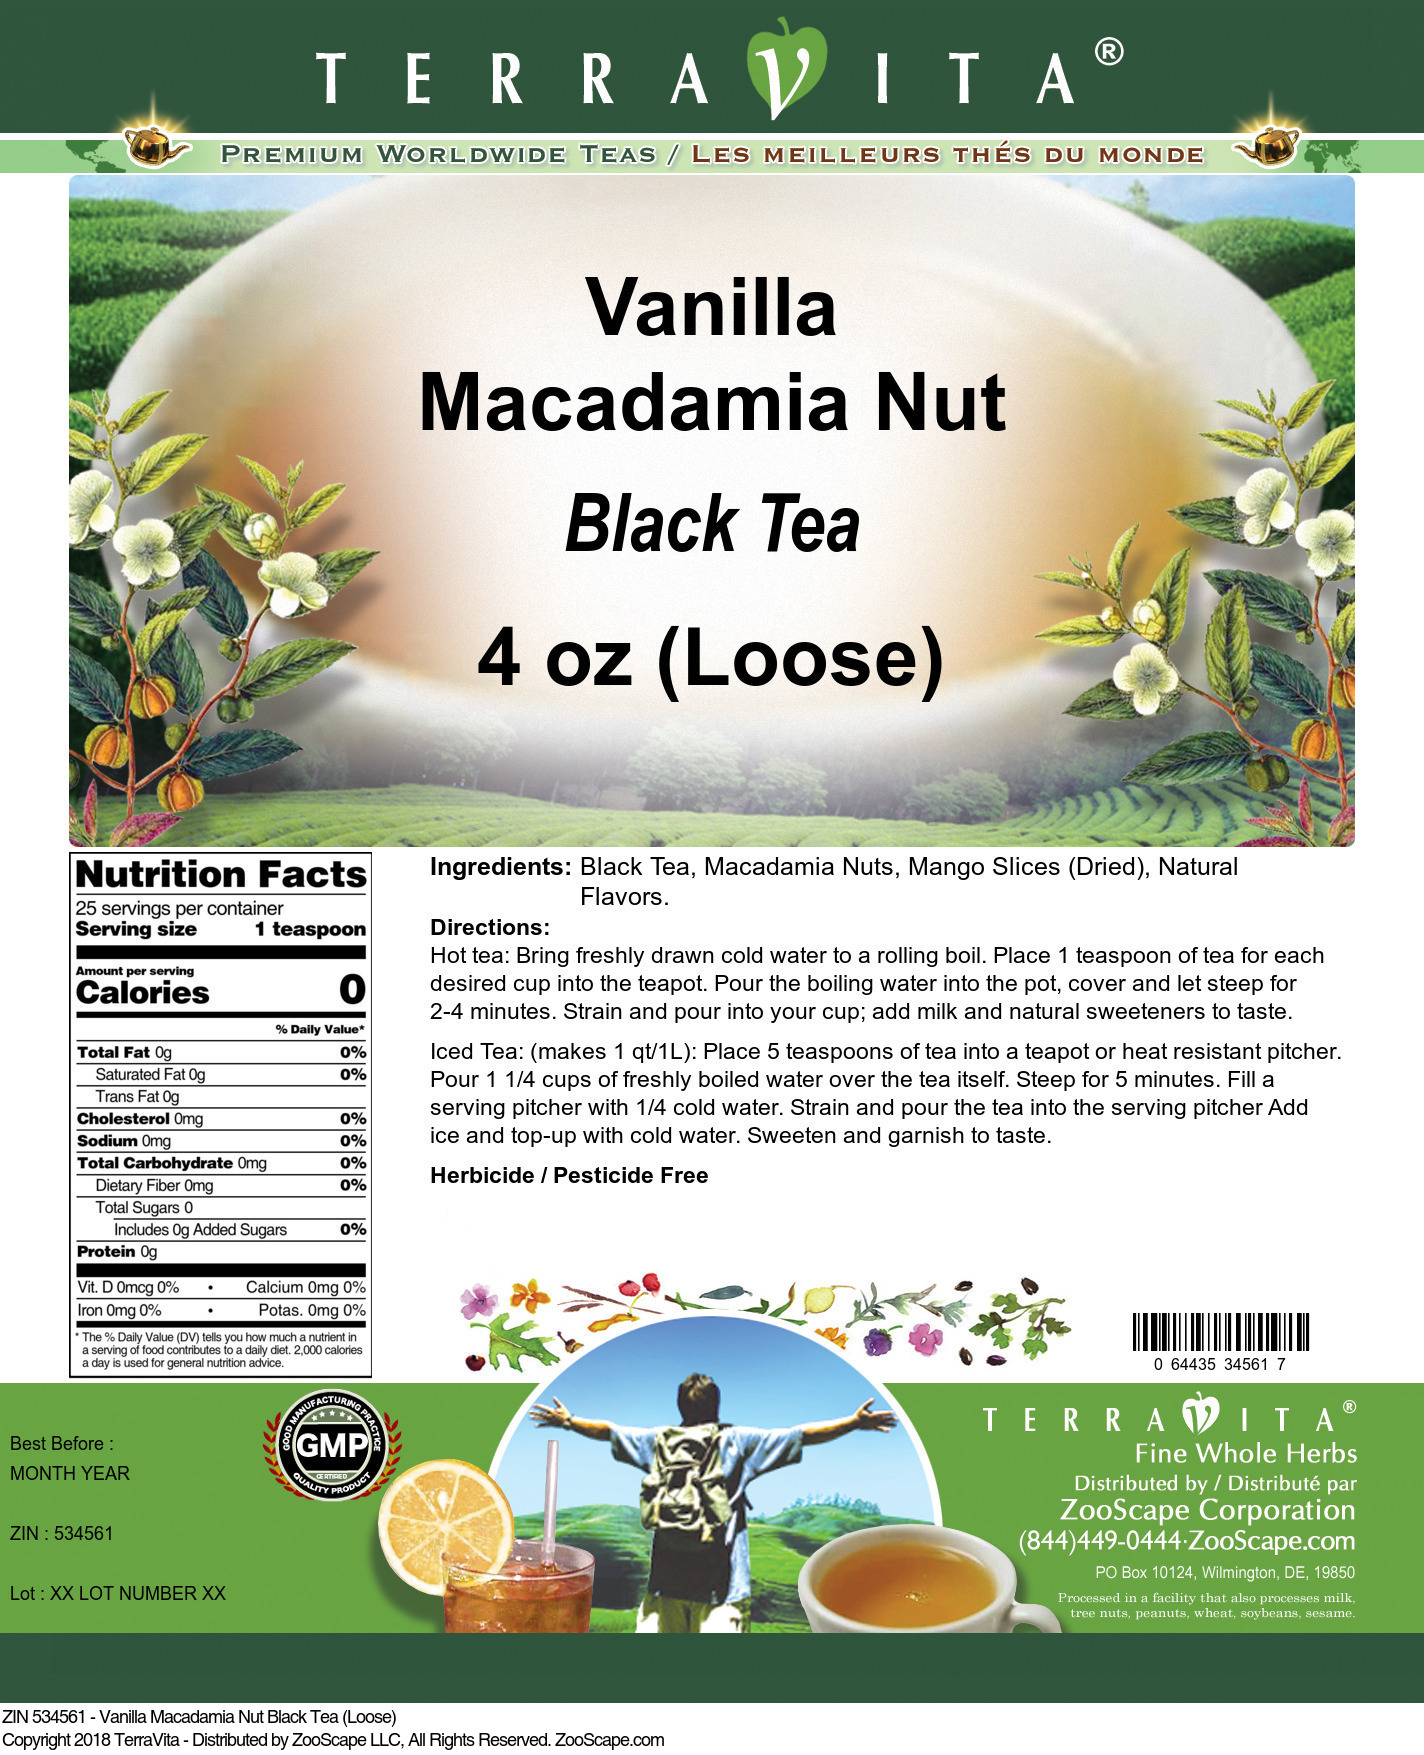 Vanilla Macadamia Nut Black Tea (Loose) - Label